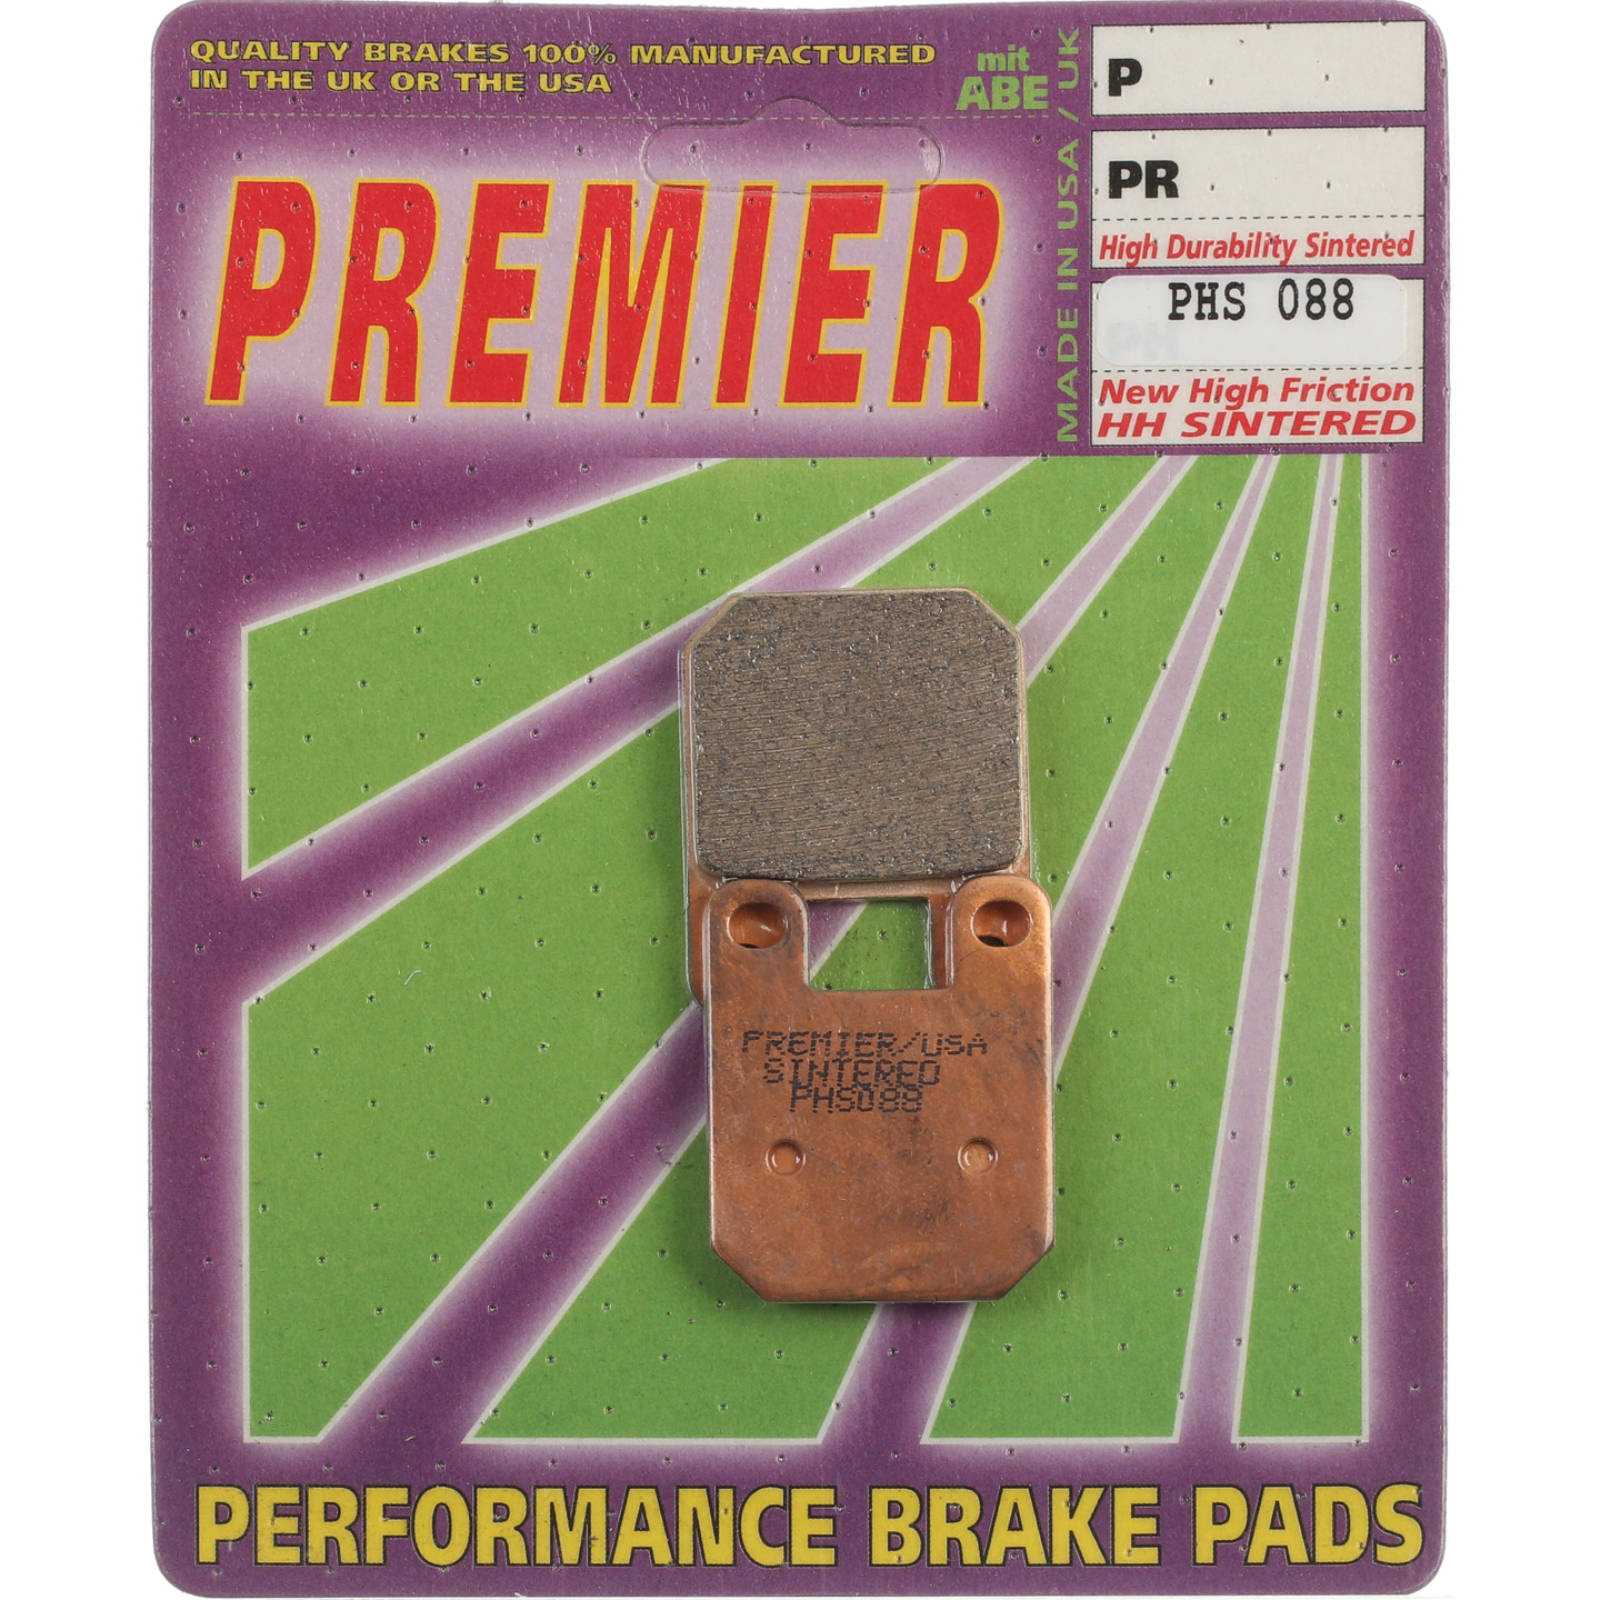 Premier, Premier Brake Pads - PH Street Sintered (GF008S3)